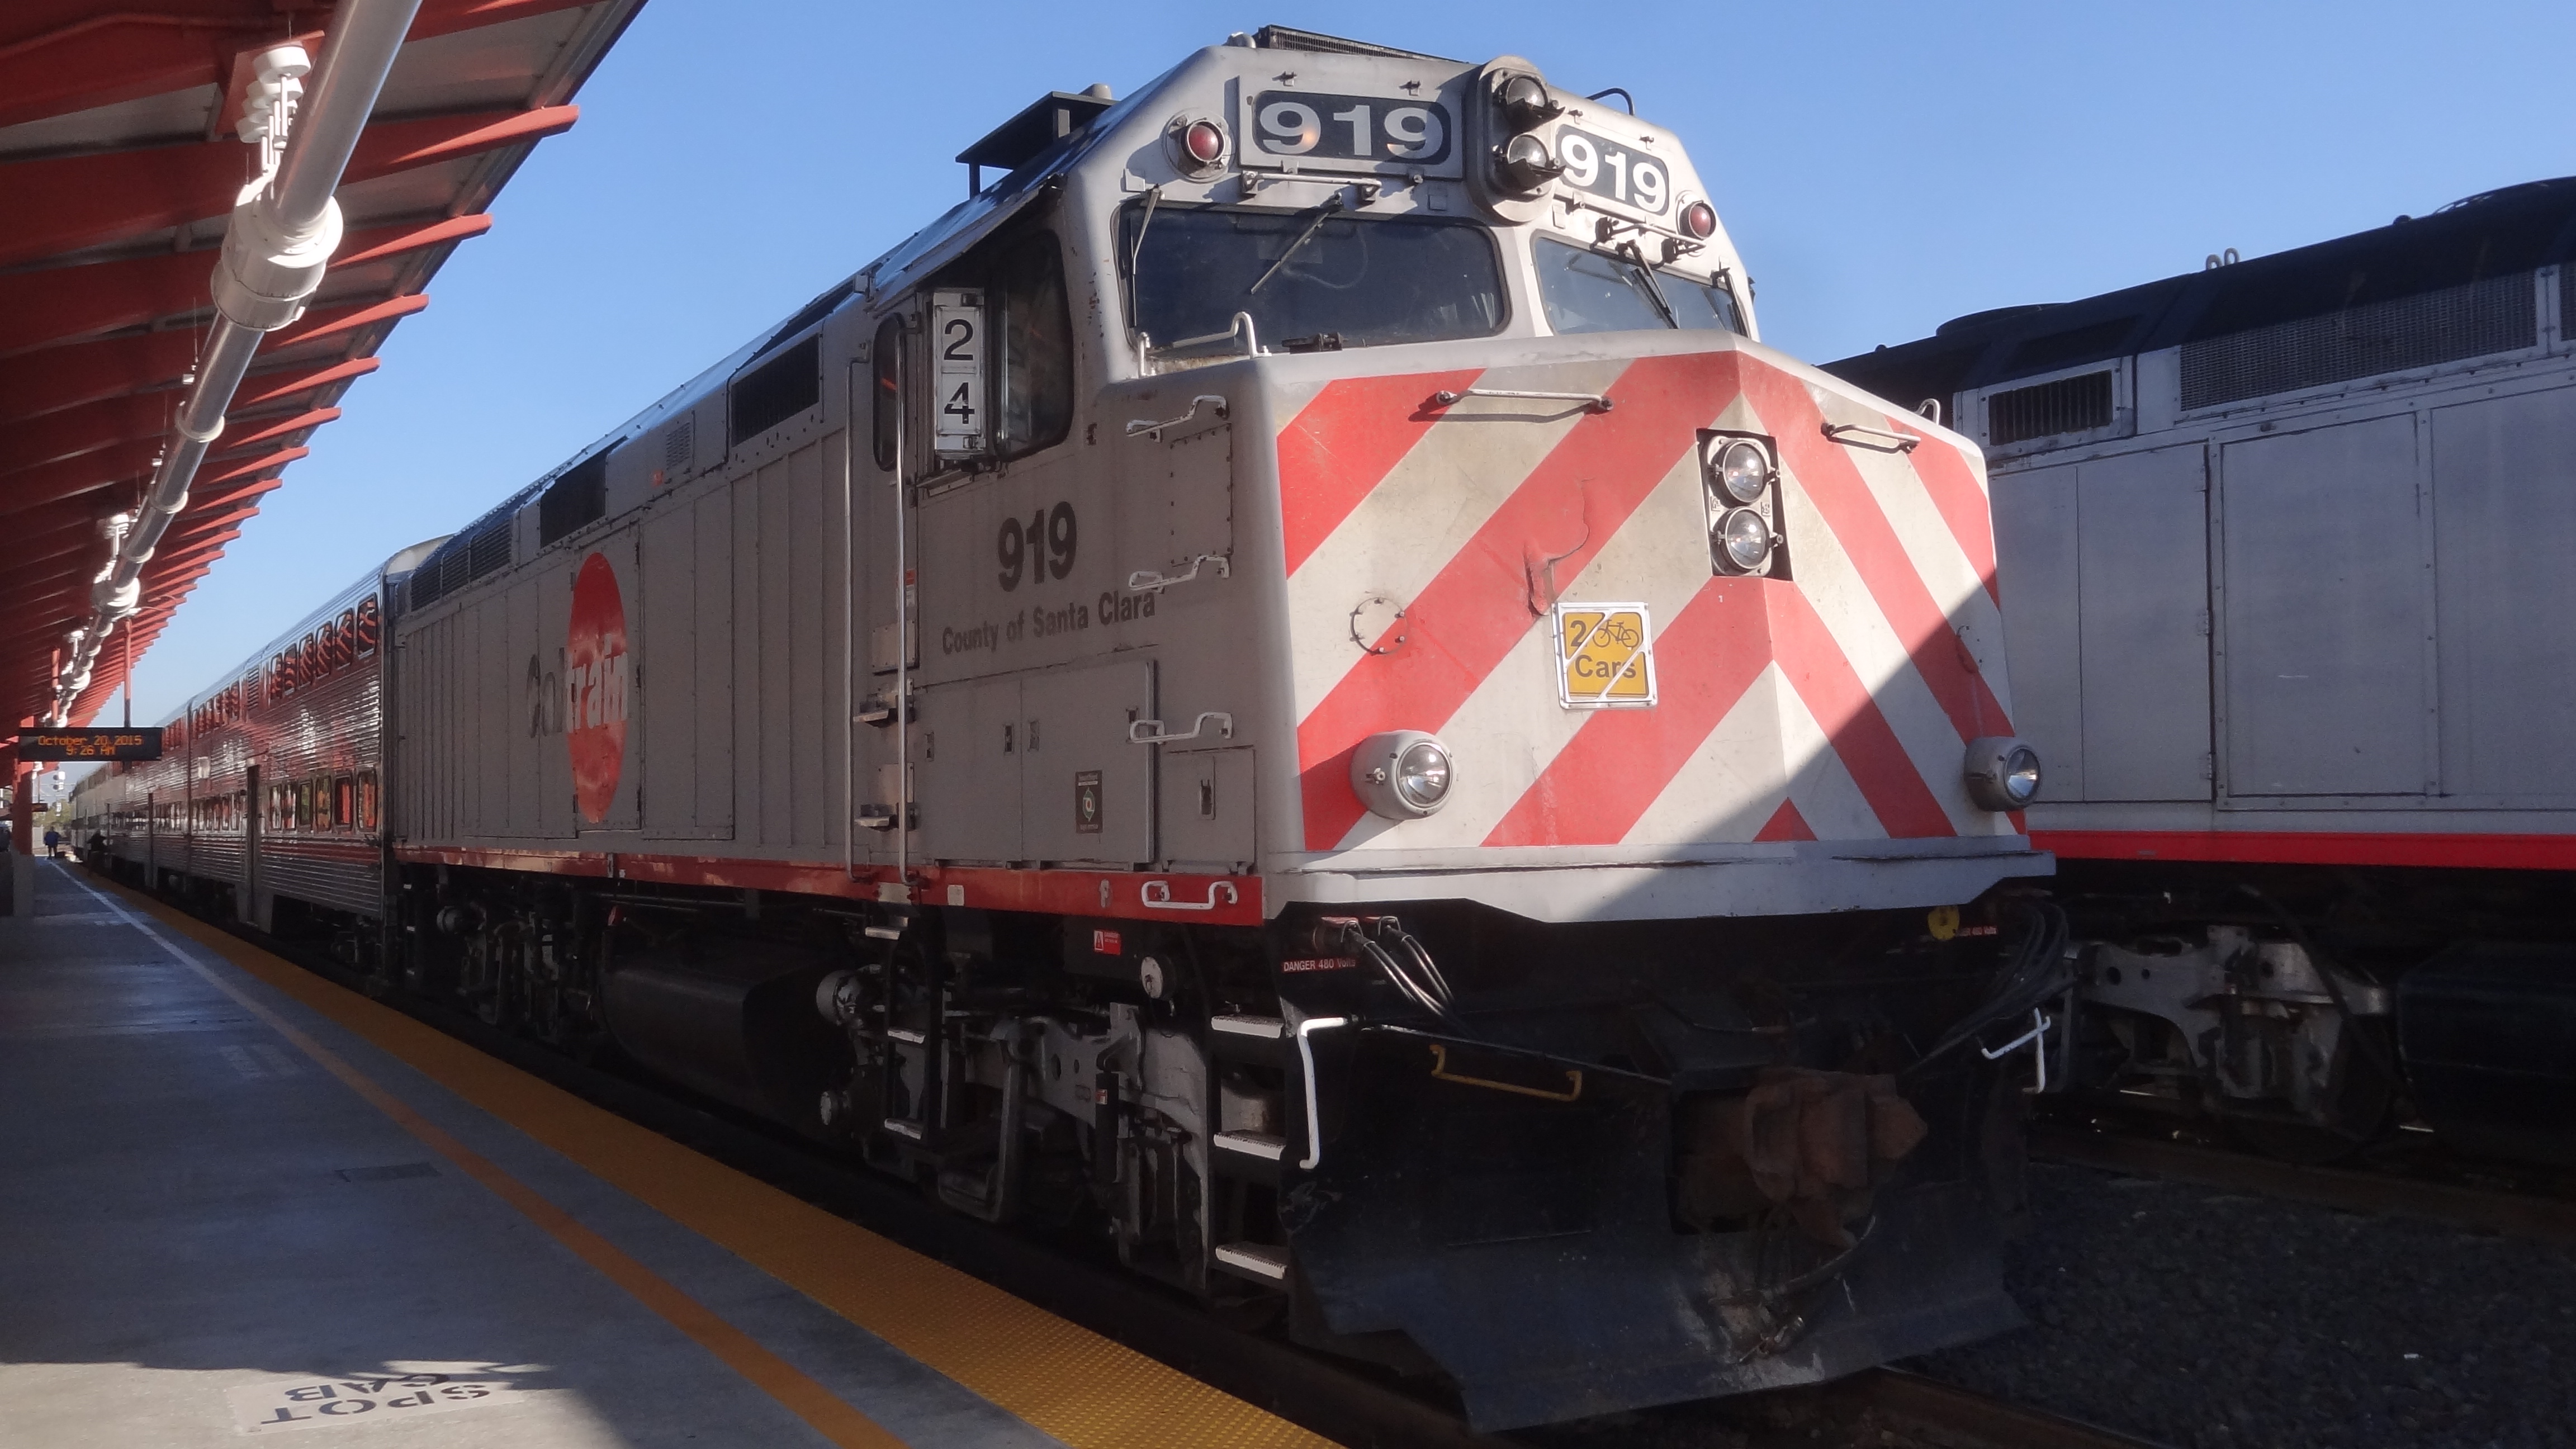 Caltrain locomotive unit 919, Santa Clara County, docked at San Jose Diridon